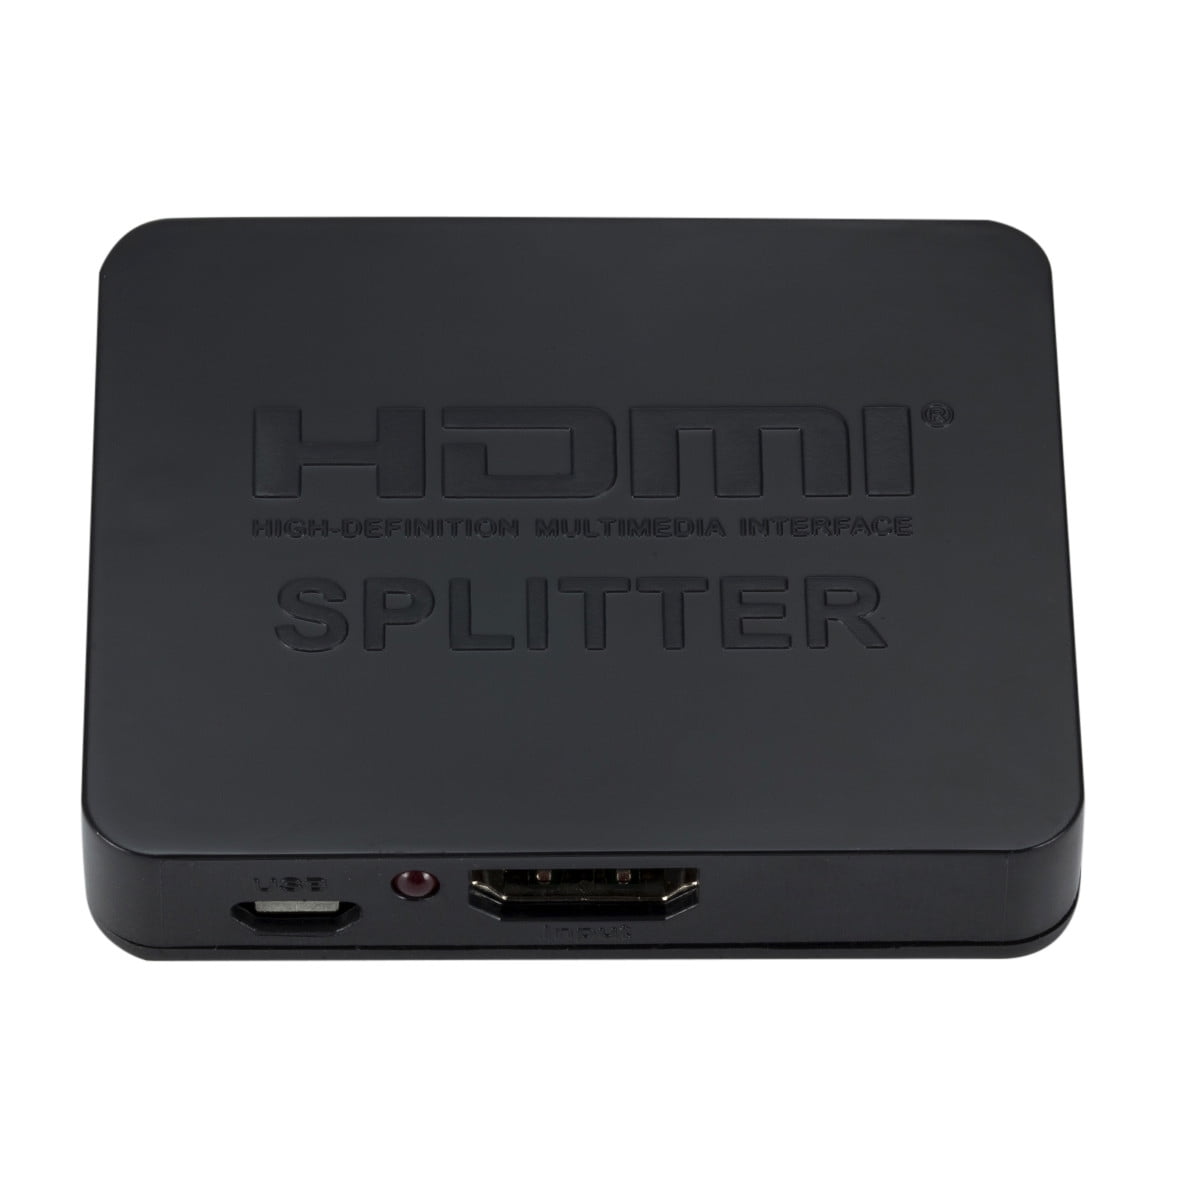 Hdmi 1 In 2 Out 1080P 4K 1X2 Hdcp Stripper Splitter Power Signal Amplifier - Walmart.com